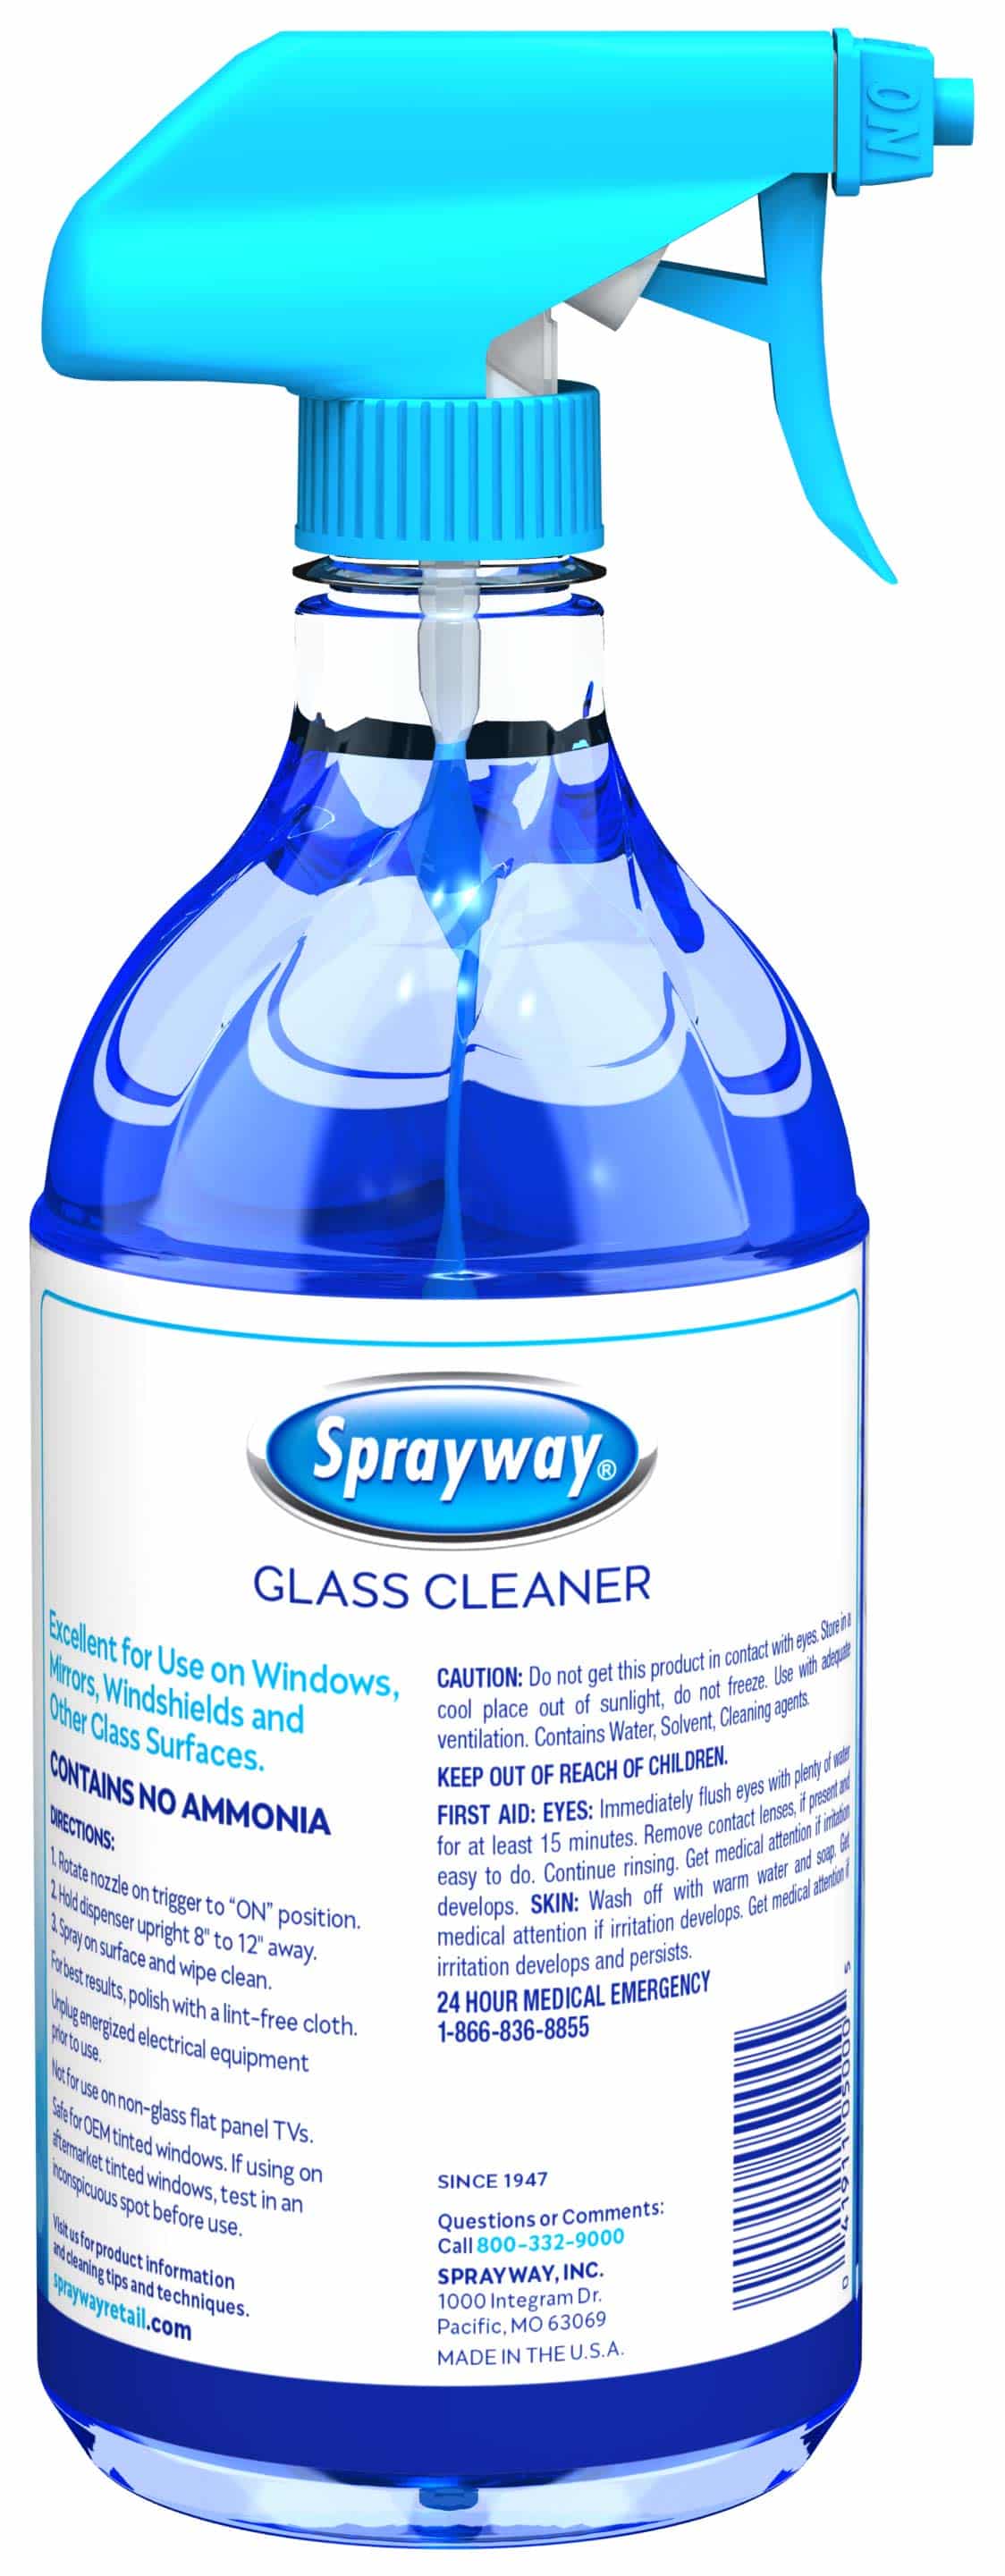 Sprayway Glass Cleaner Clinging Spray